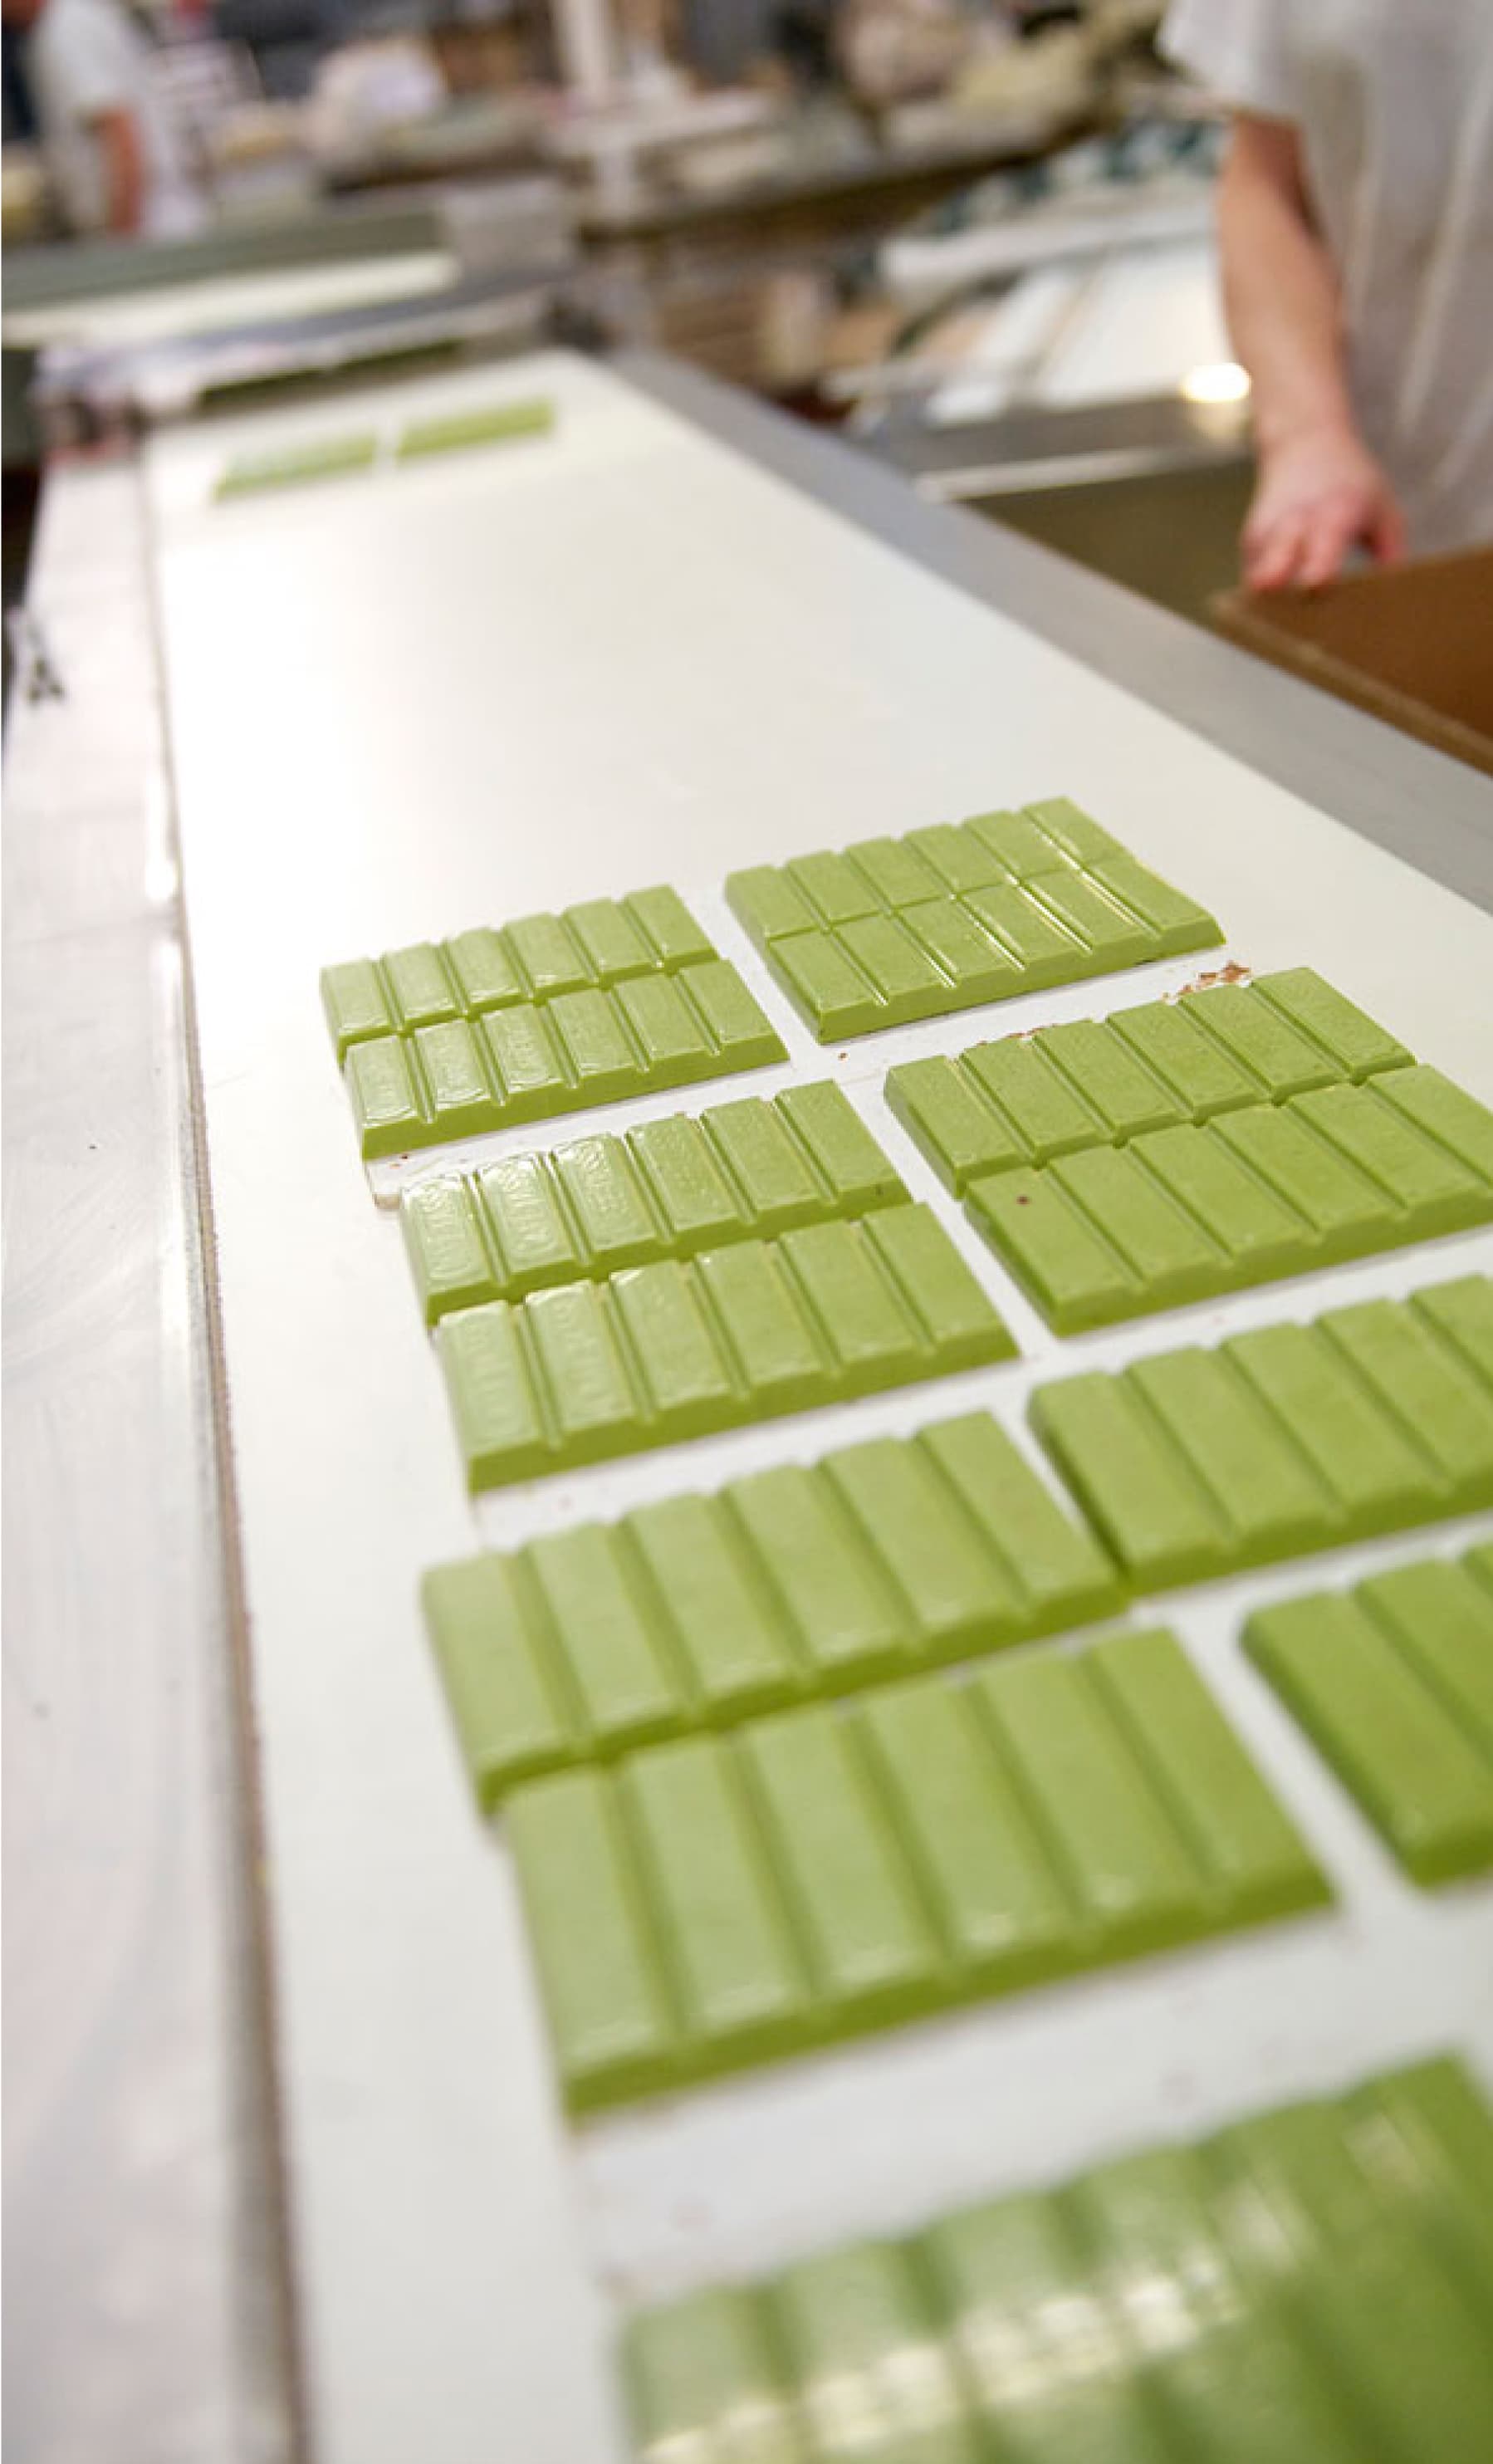 Chocolate bars on the Café-Tasse production line